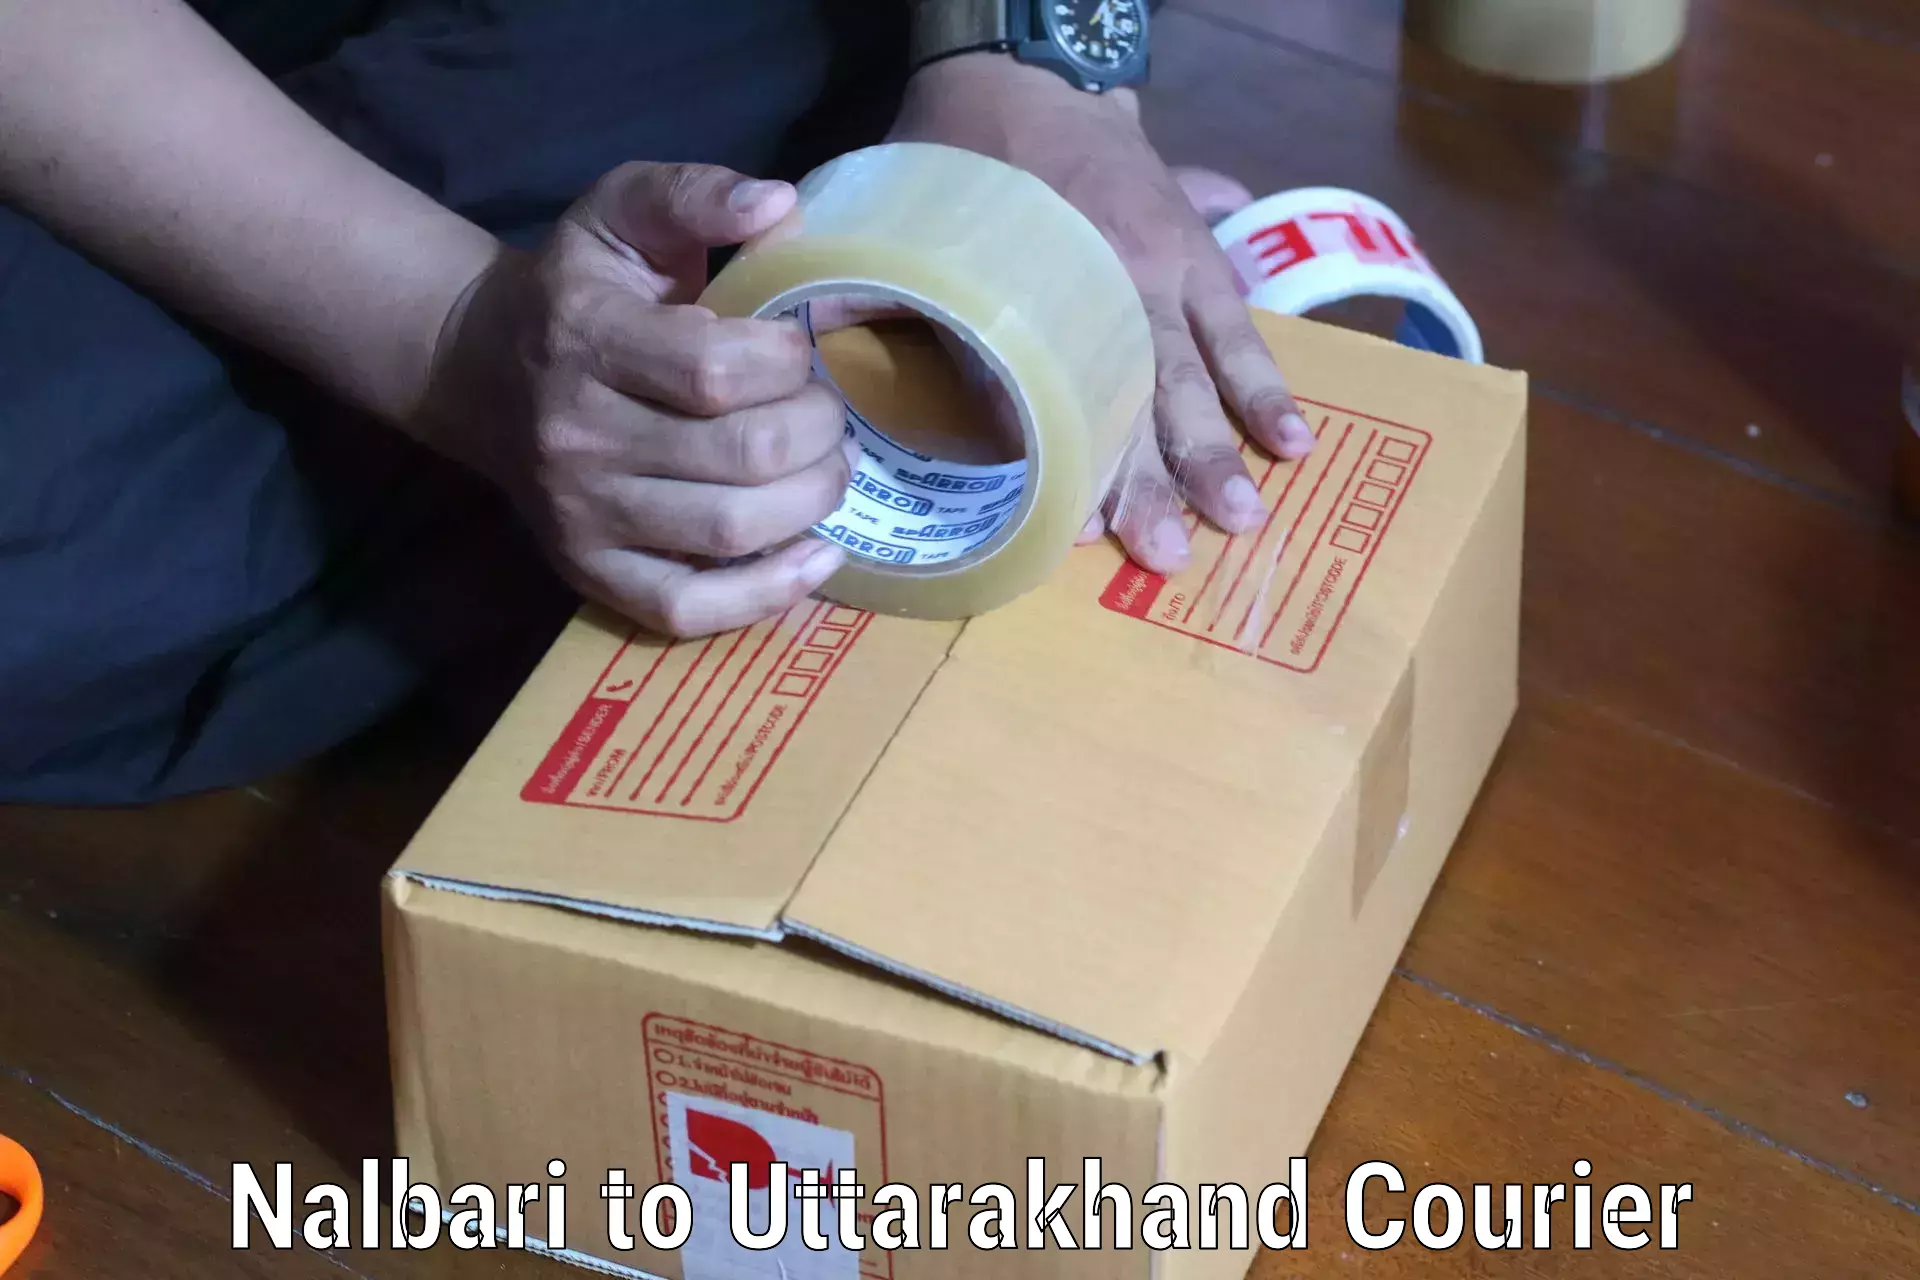 International parcel service Nalbari to IIT Roorkee